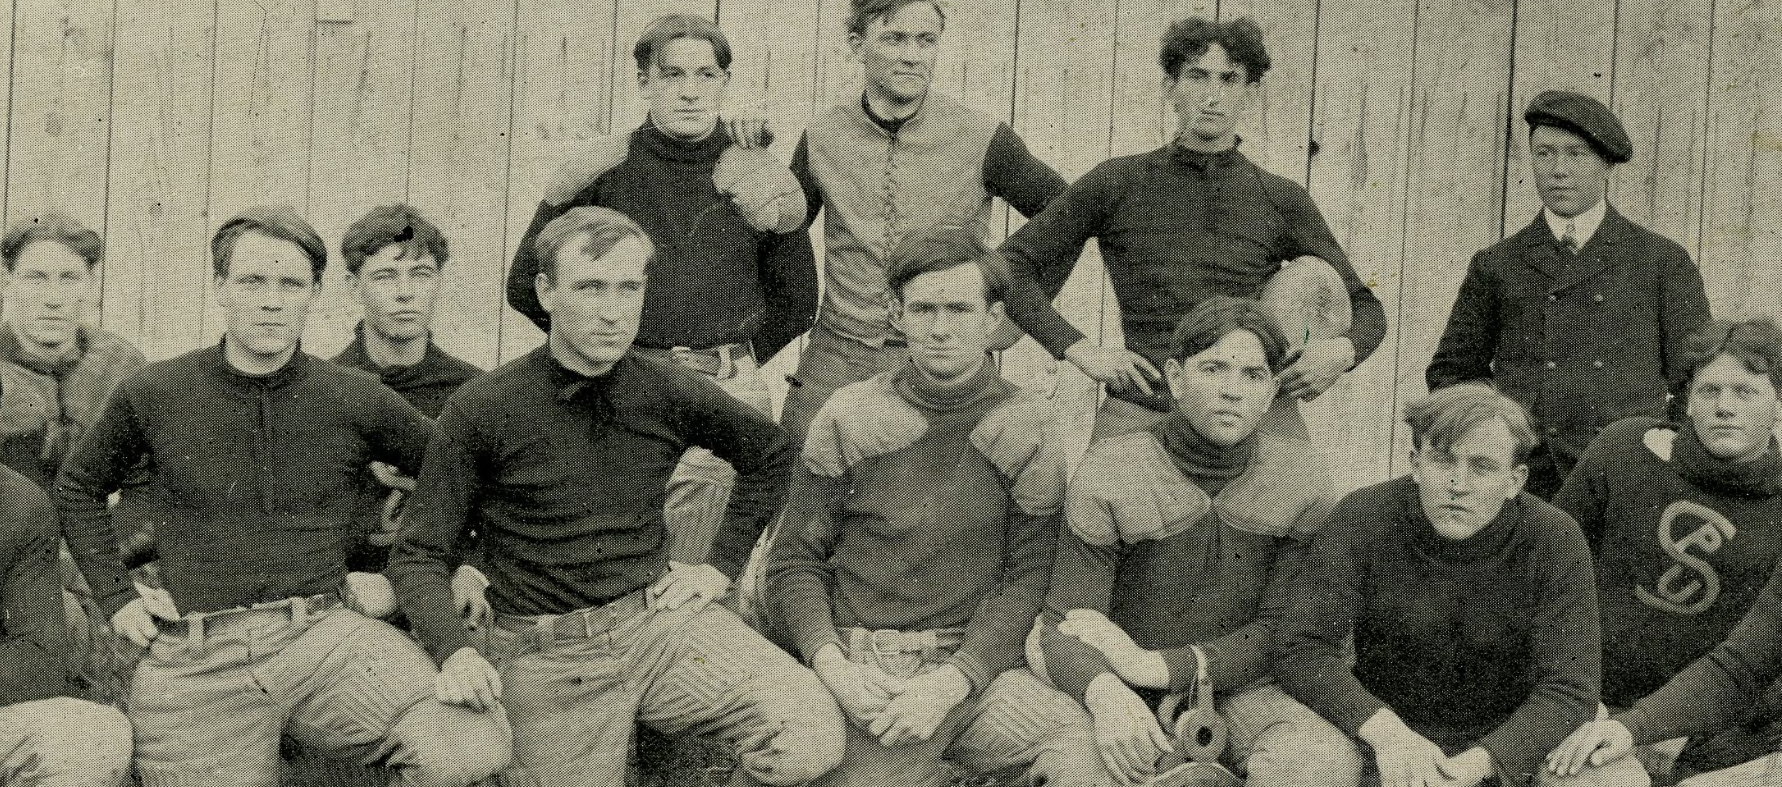 University of Puget Sound's 1903 football team.